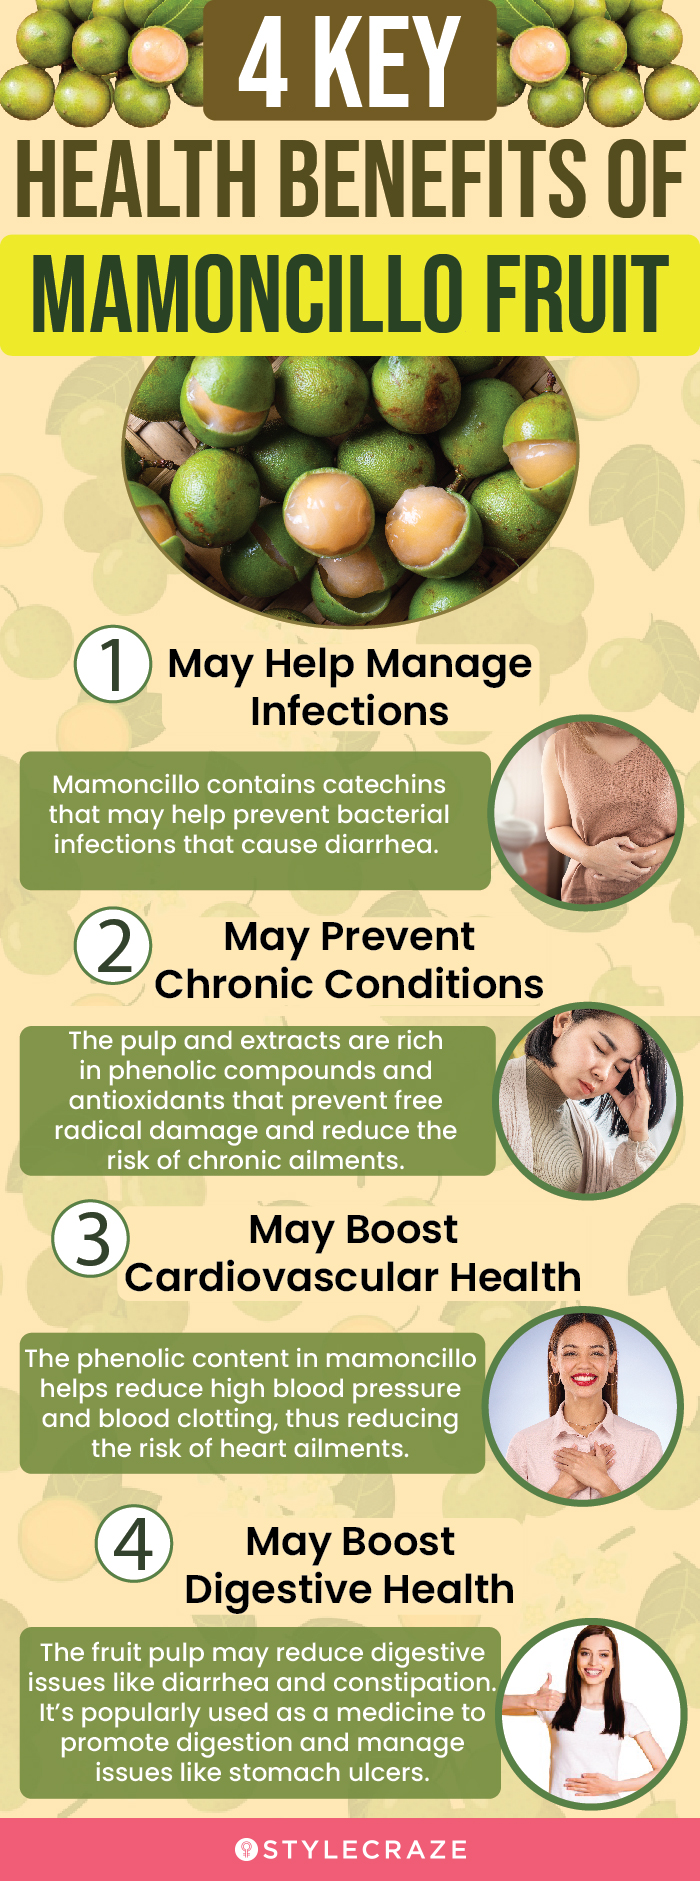 4 key health benefits of mamoncillo fruit (infographic)